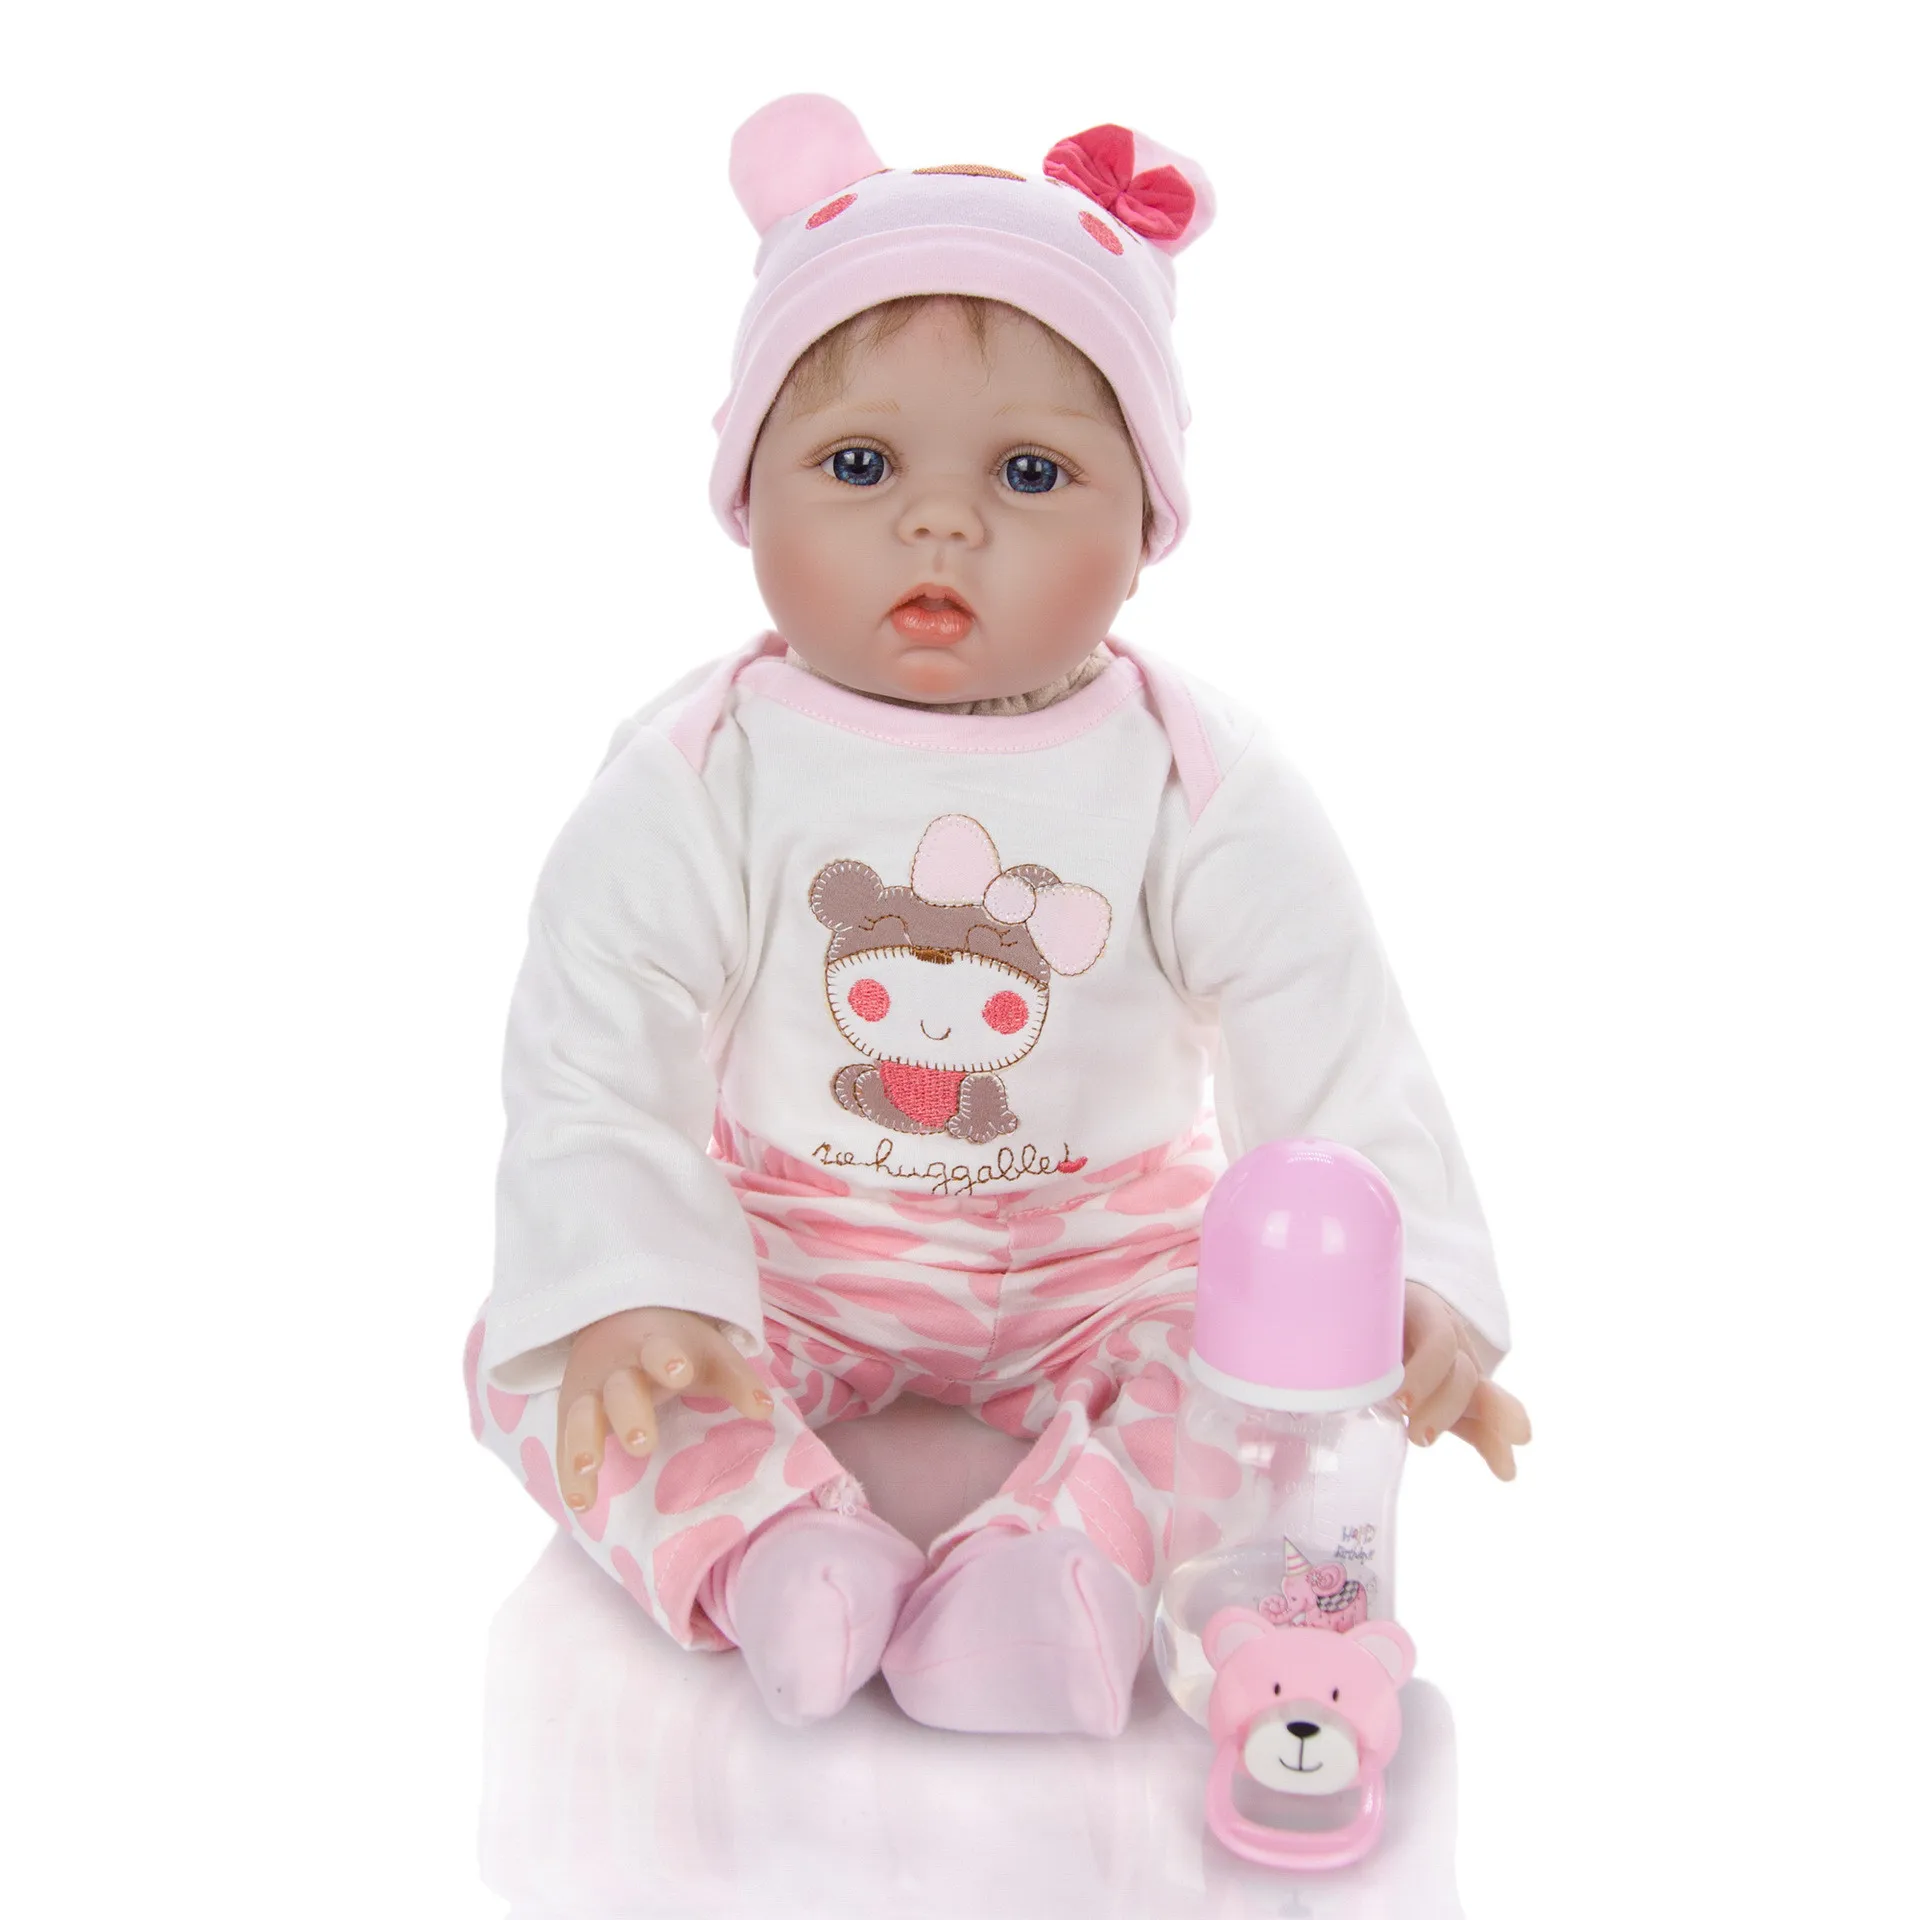 

22" 55cm Lifelike Reborn Baby Doll Lovely Soft Doll Vinyl Silicone Realistic Looking Newborn Doll Simulation Child Birthday Gift